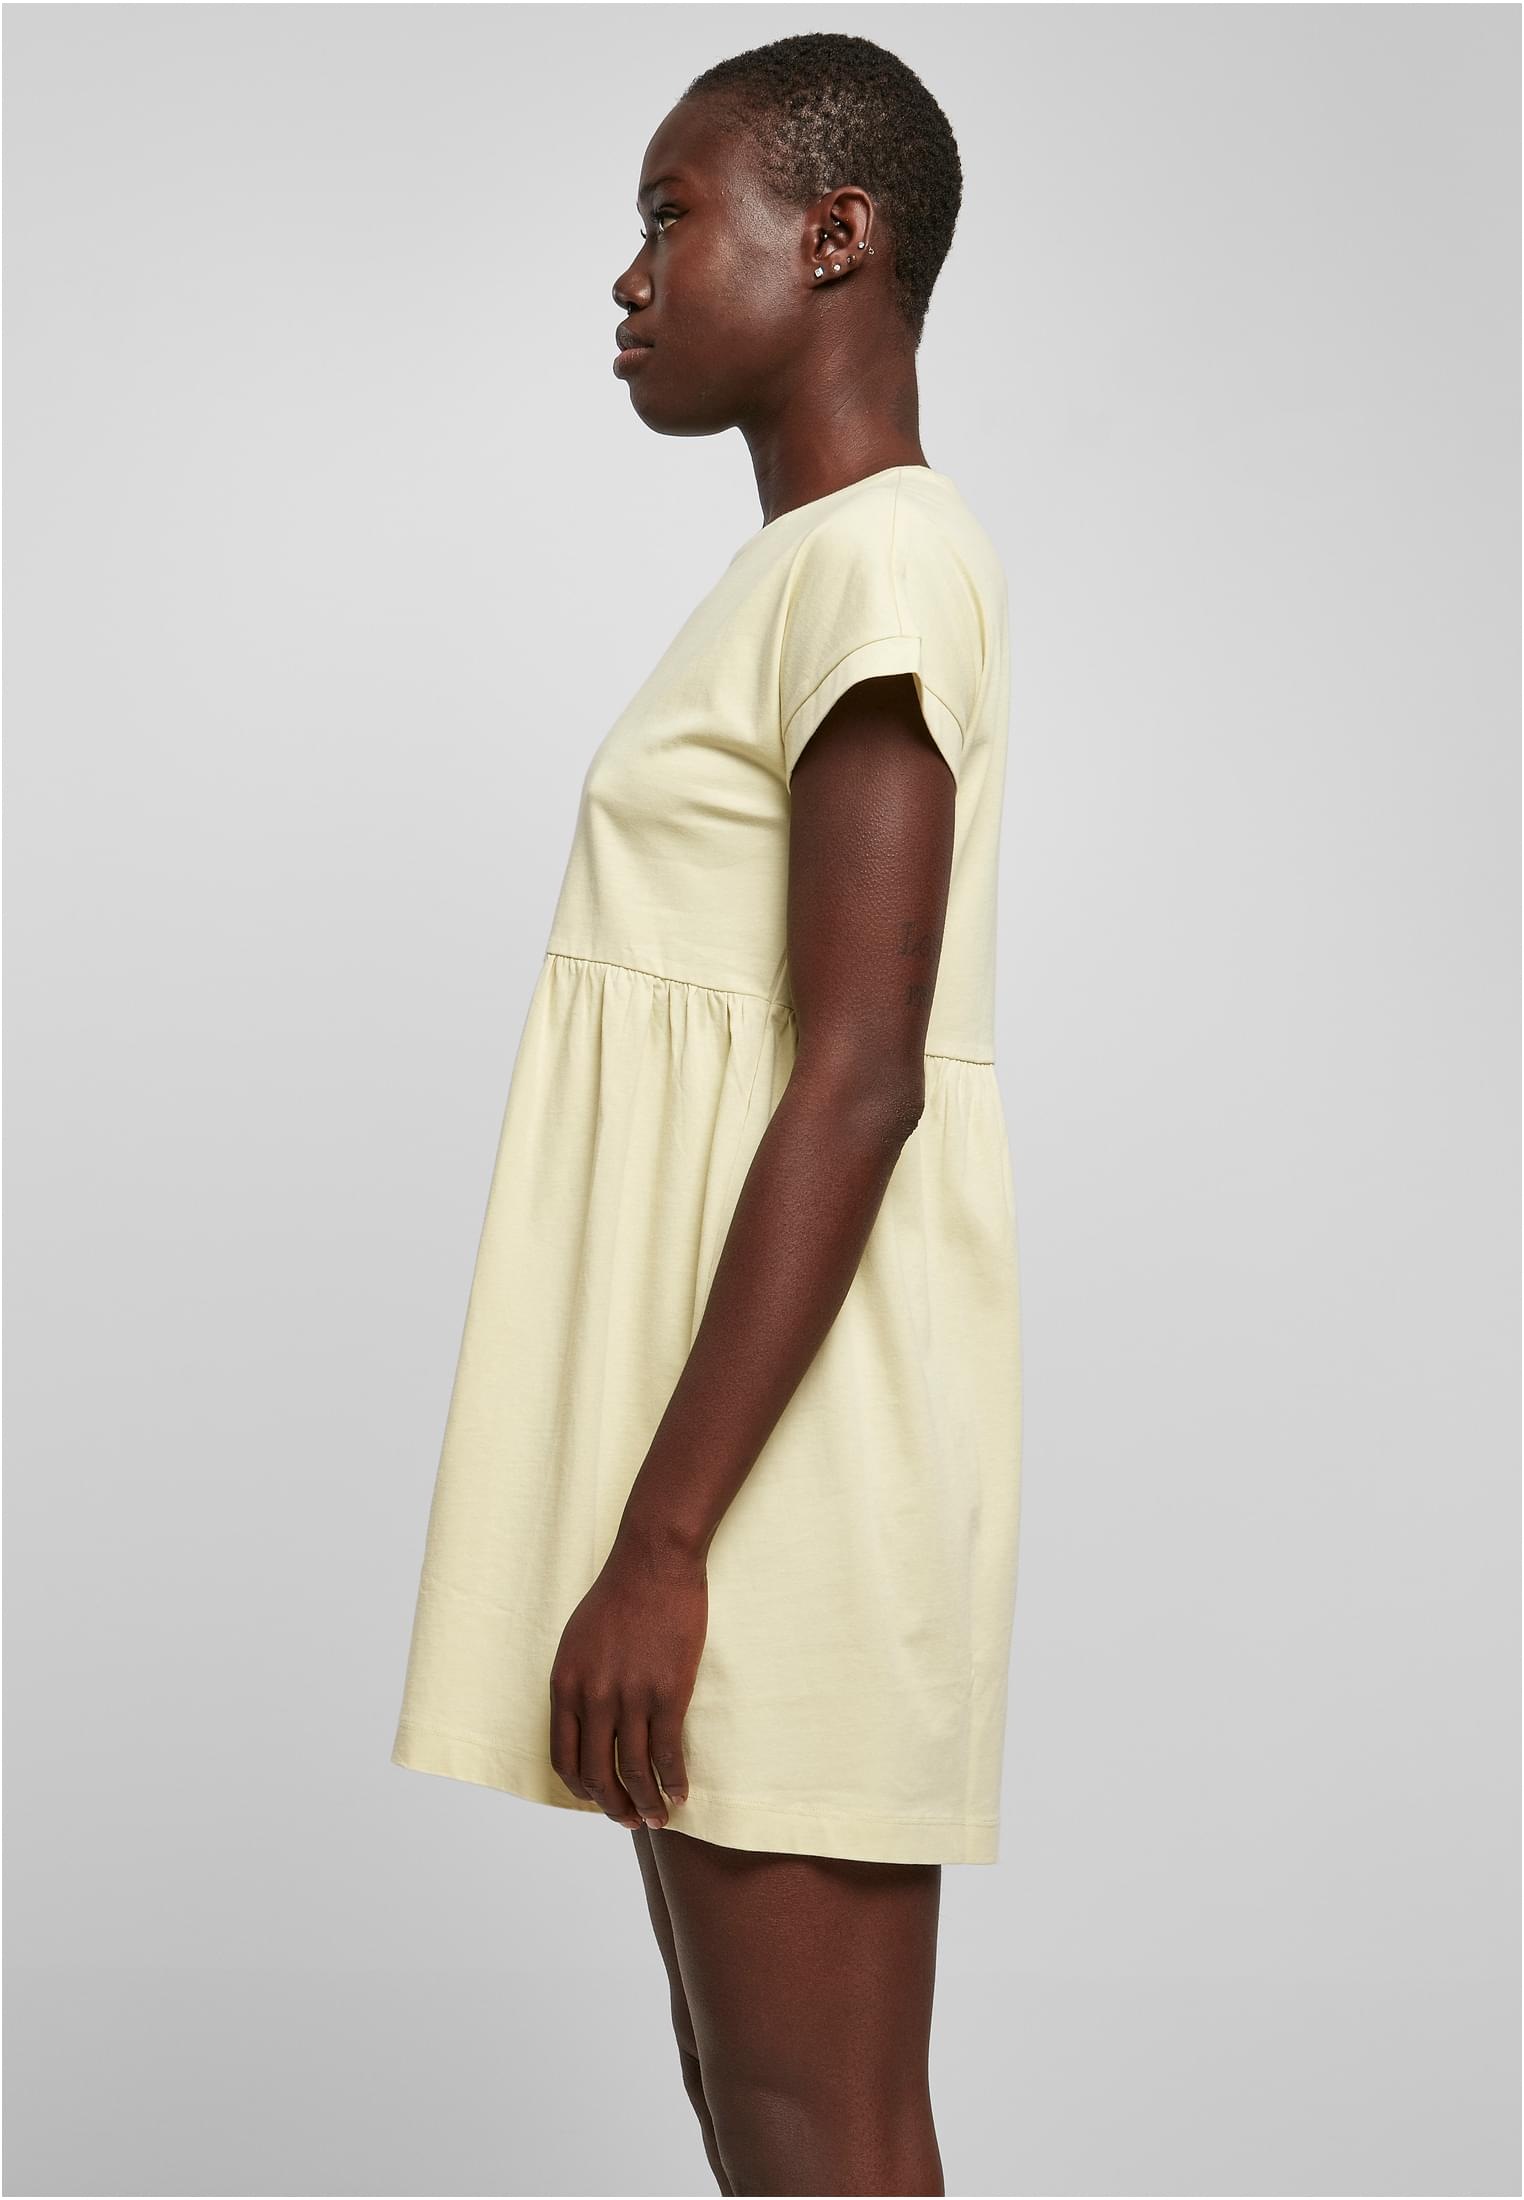 Tee | I\'m URBAN (1 Organic CLASSICS Empire Valance Ladies kaufen online Dress«, »Damen Jerseykleid walking tlg.)